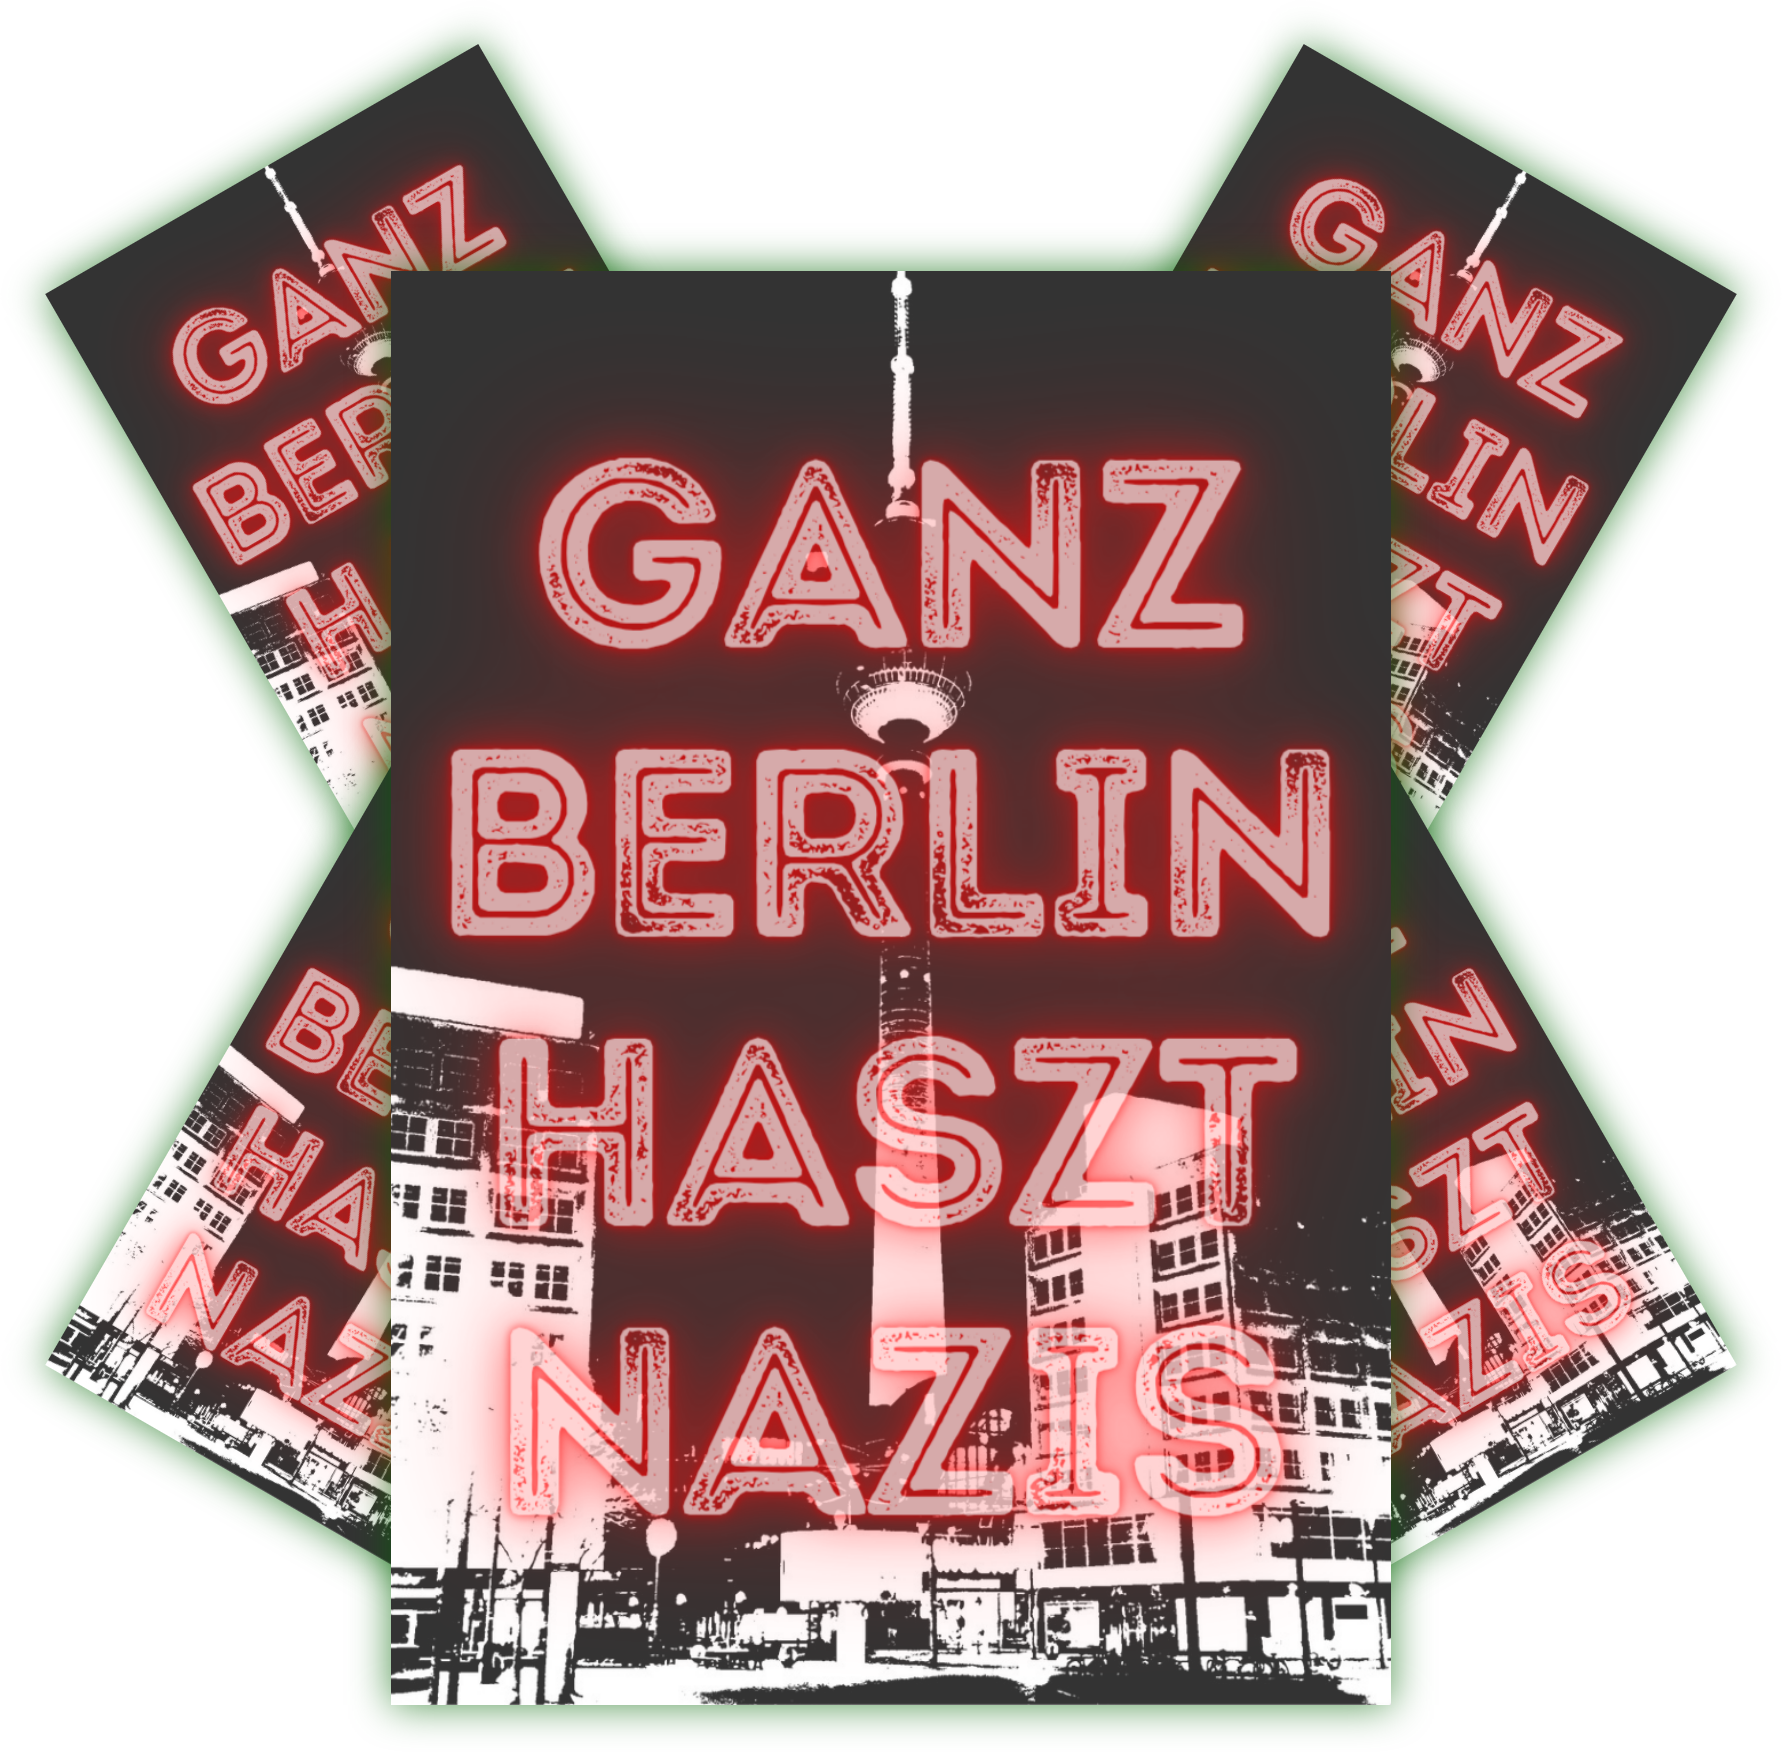 ganz Berlin haszt Nazis | Aufkleber